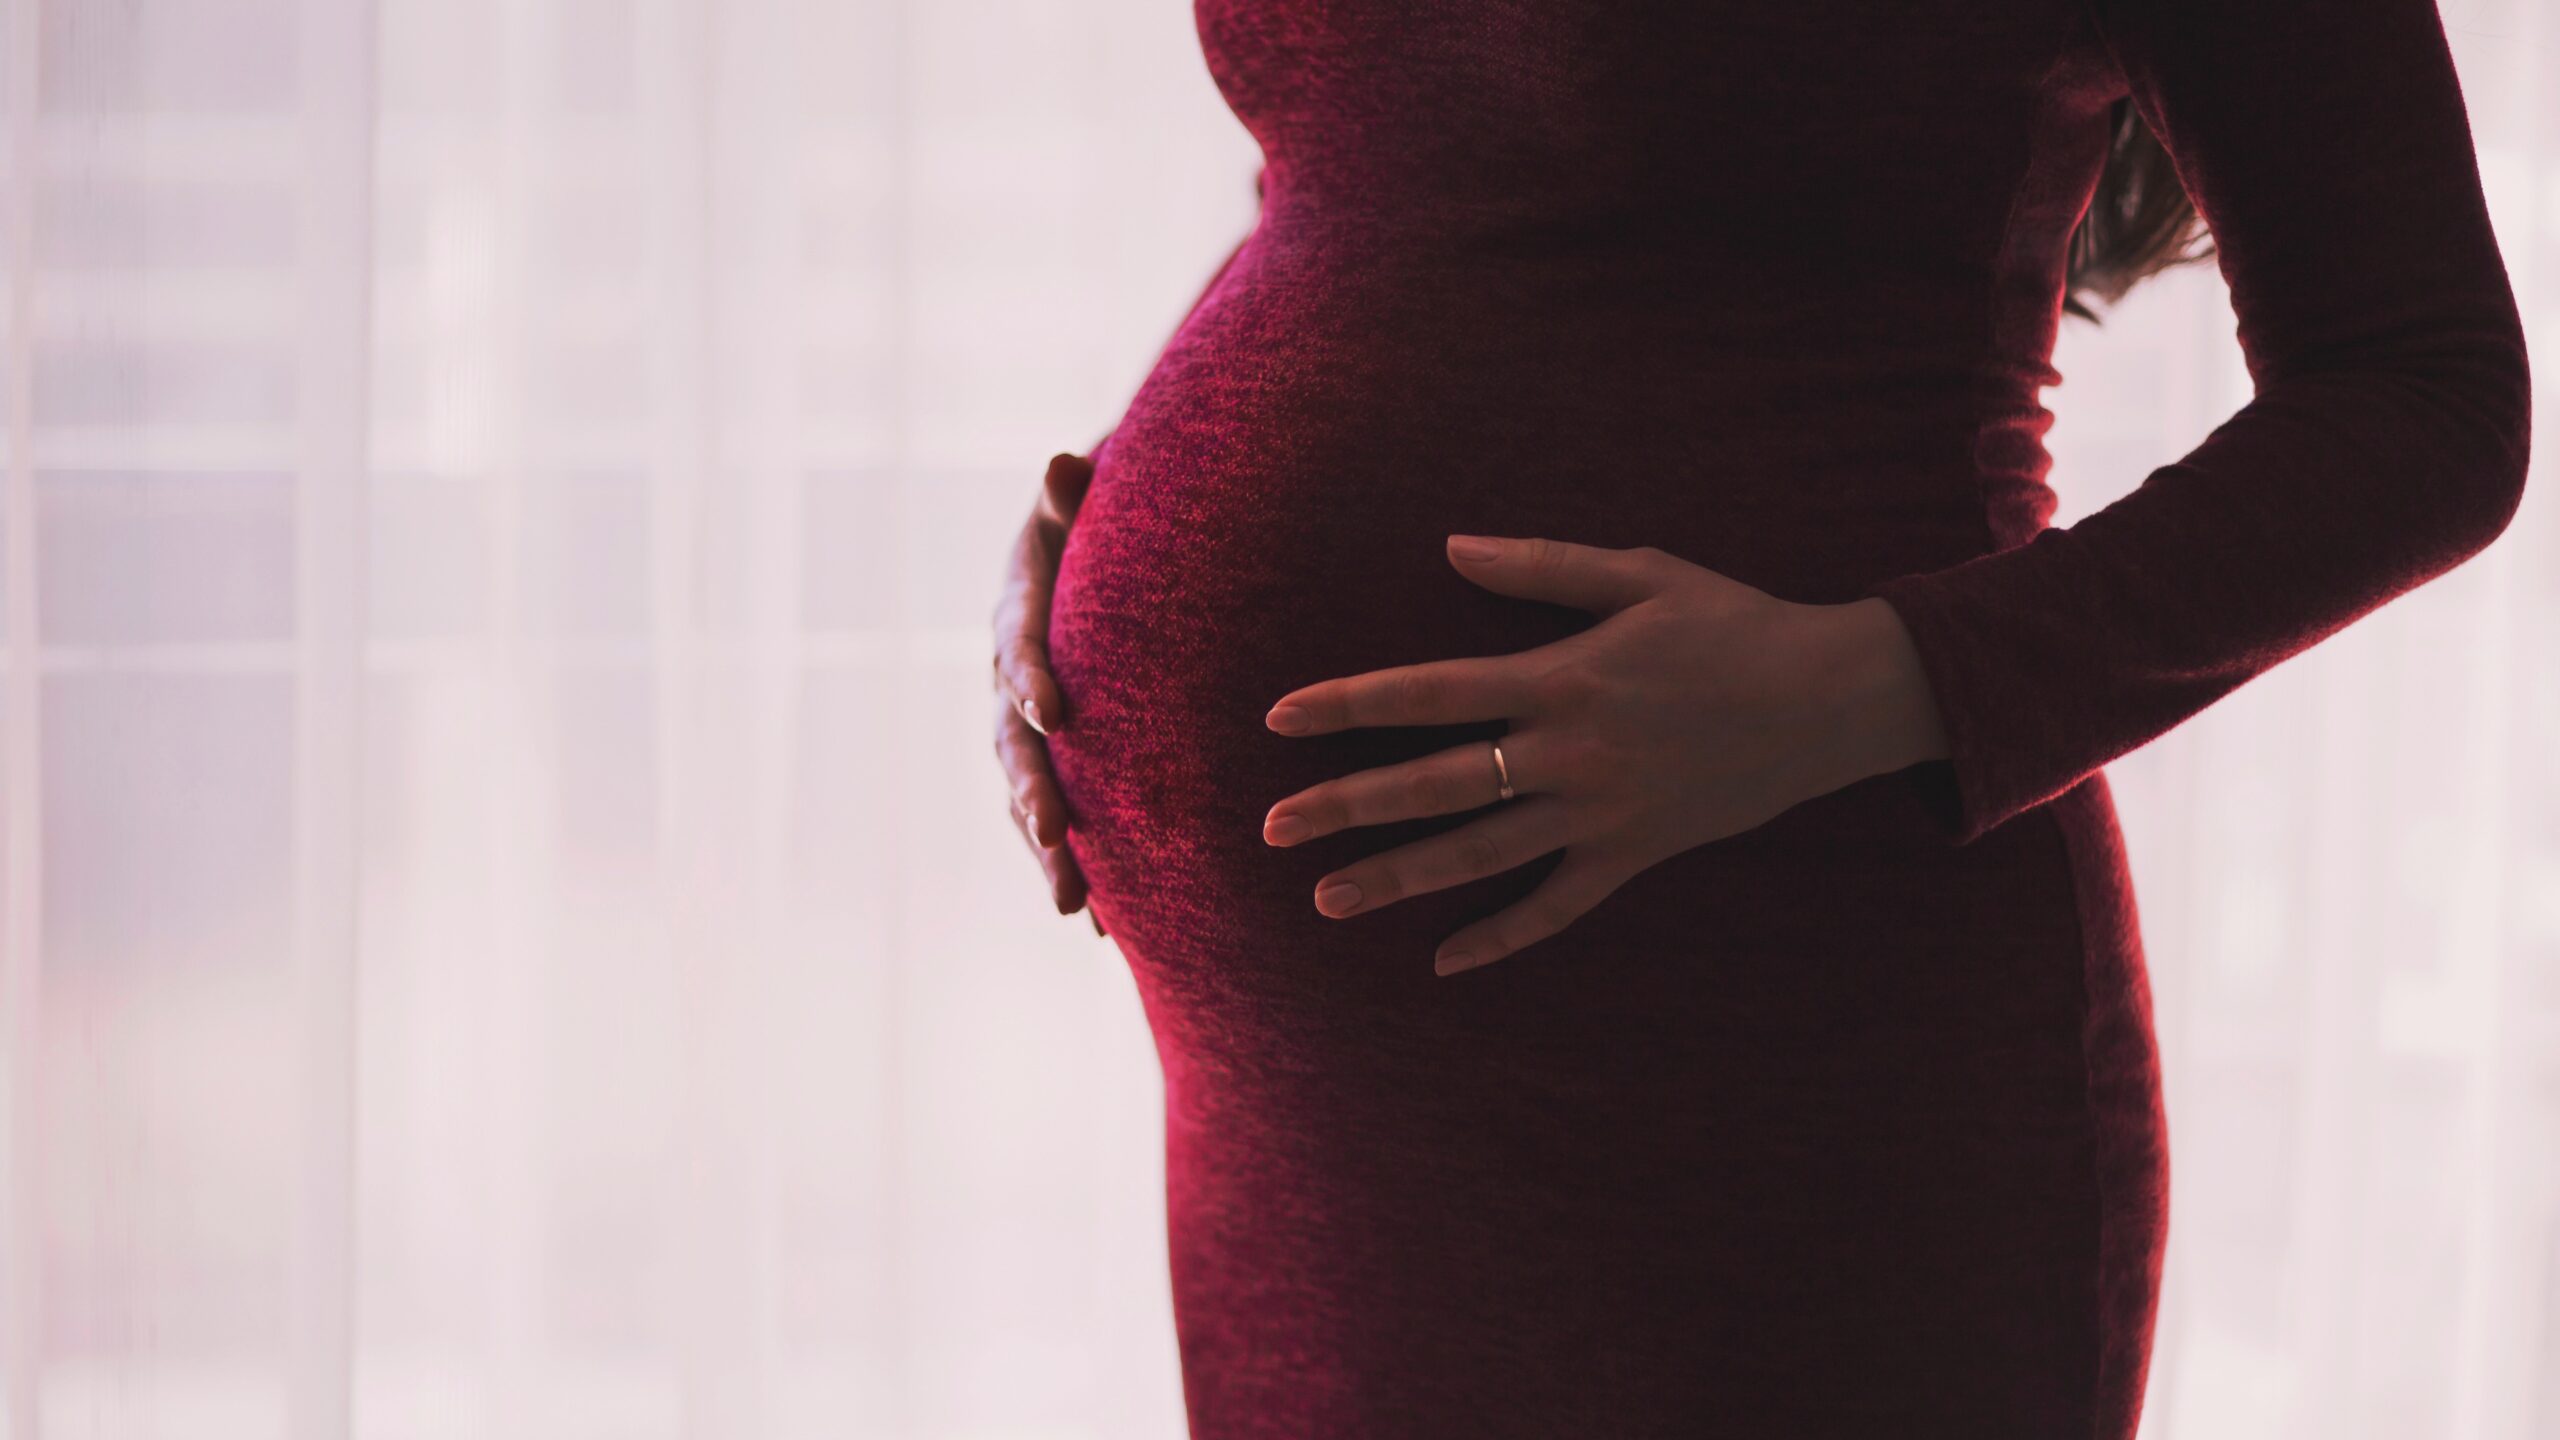 Demystifying Aspects of a Healthy Pregnancy